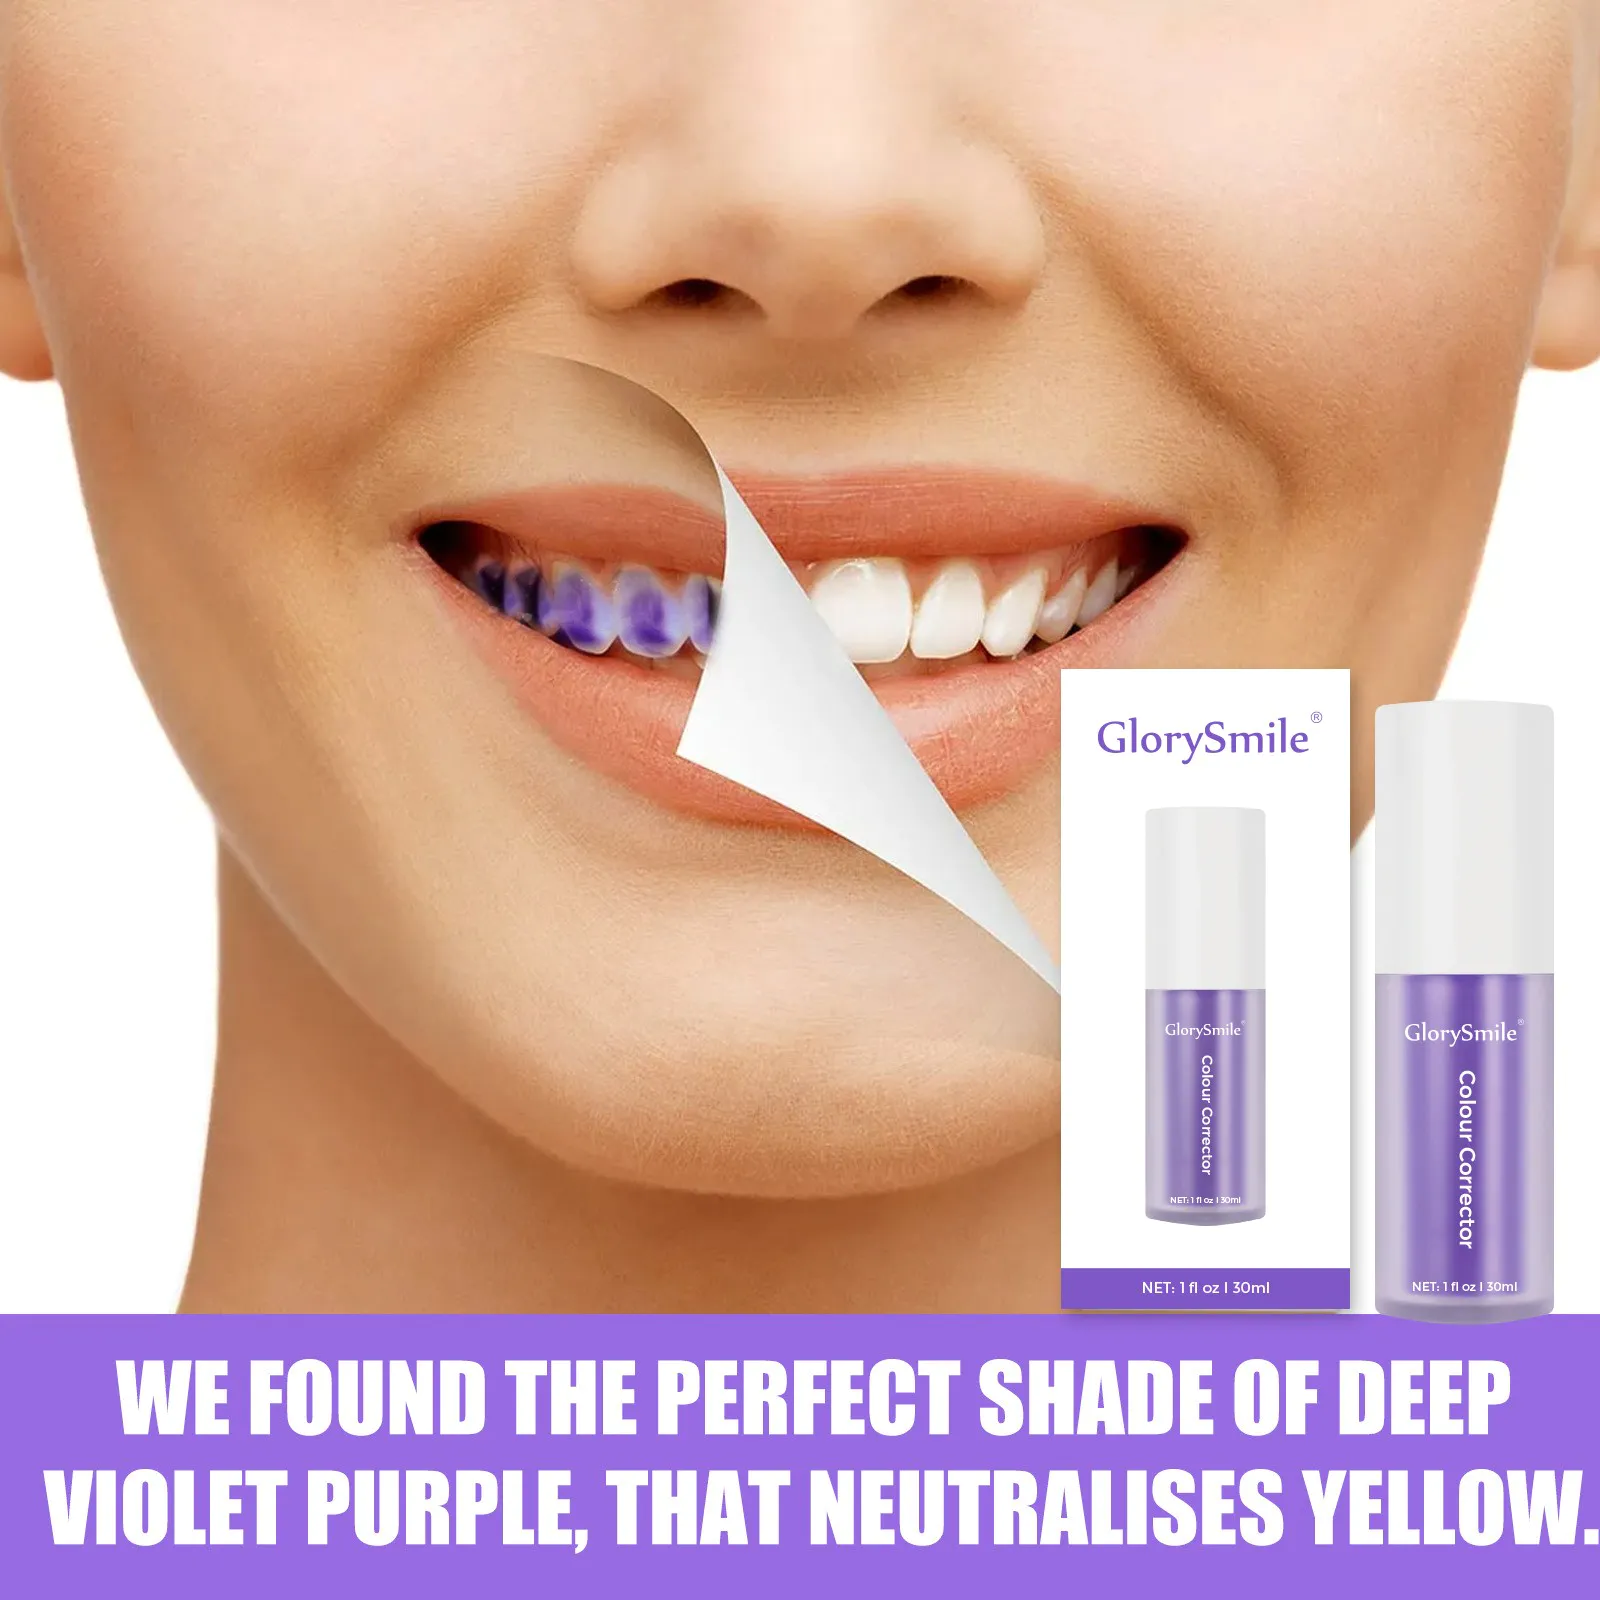 GlorySmile v34 toothpaste distributors for whitening teeth